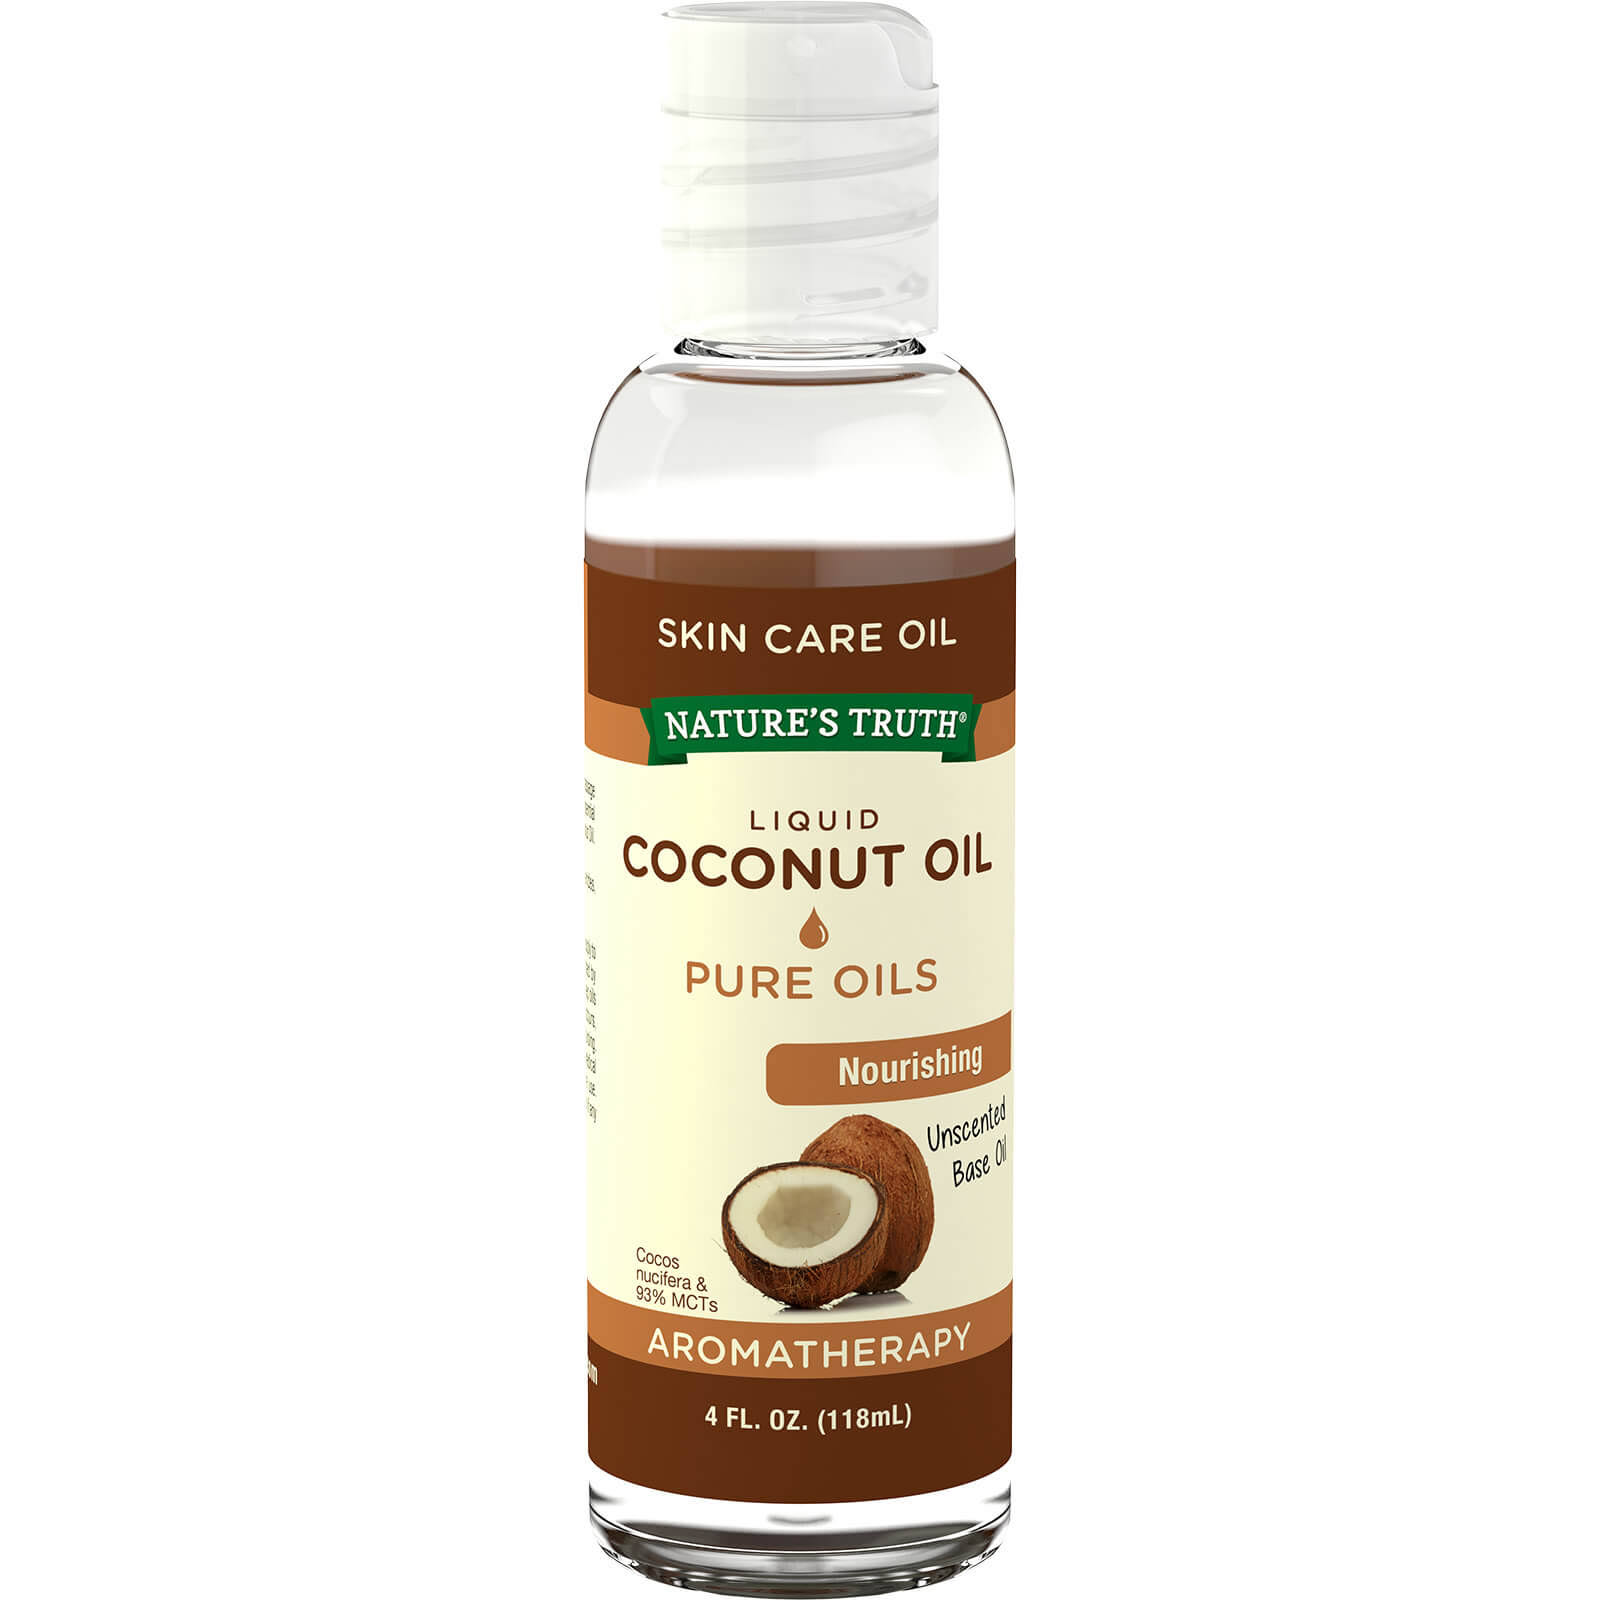 Nature's Truth Nourishing Coconut Oil - 4oz